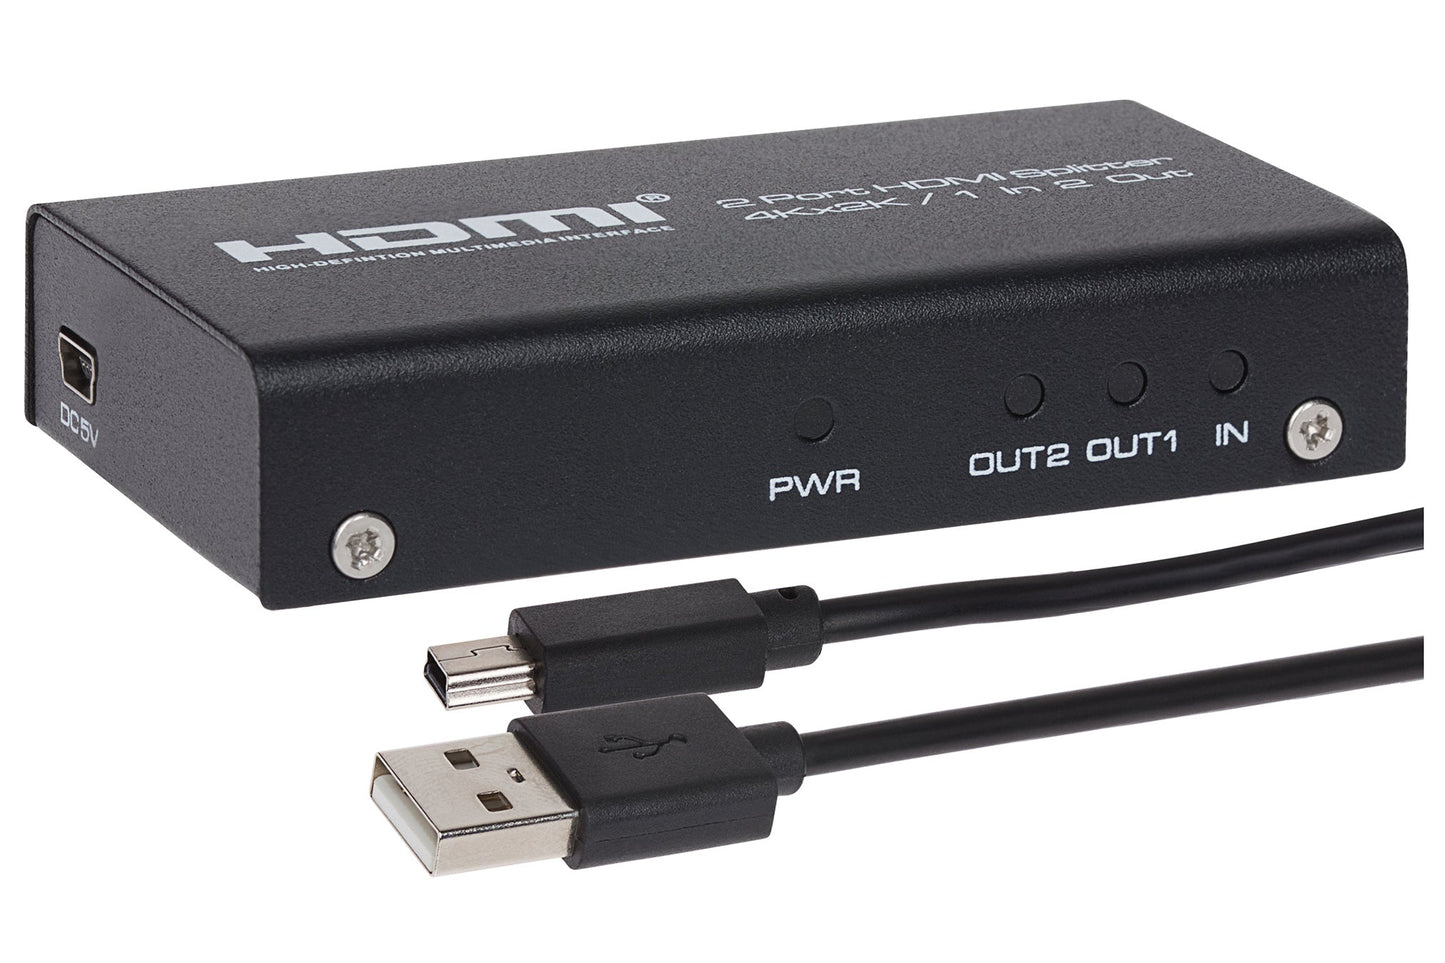 Nikkai HDMI Splitter 1 Port In 2 Port Out 4K 30Hz - Black - maplin.co.uk